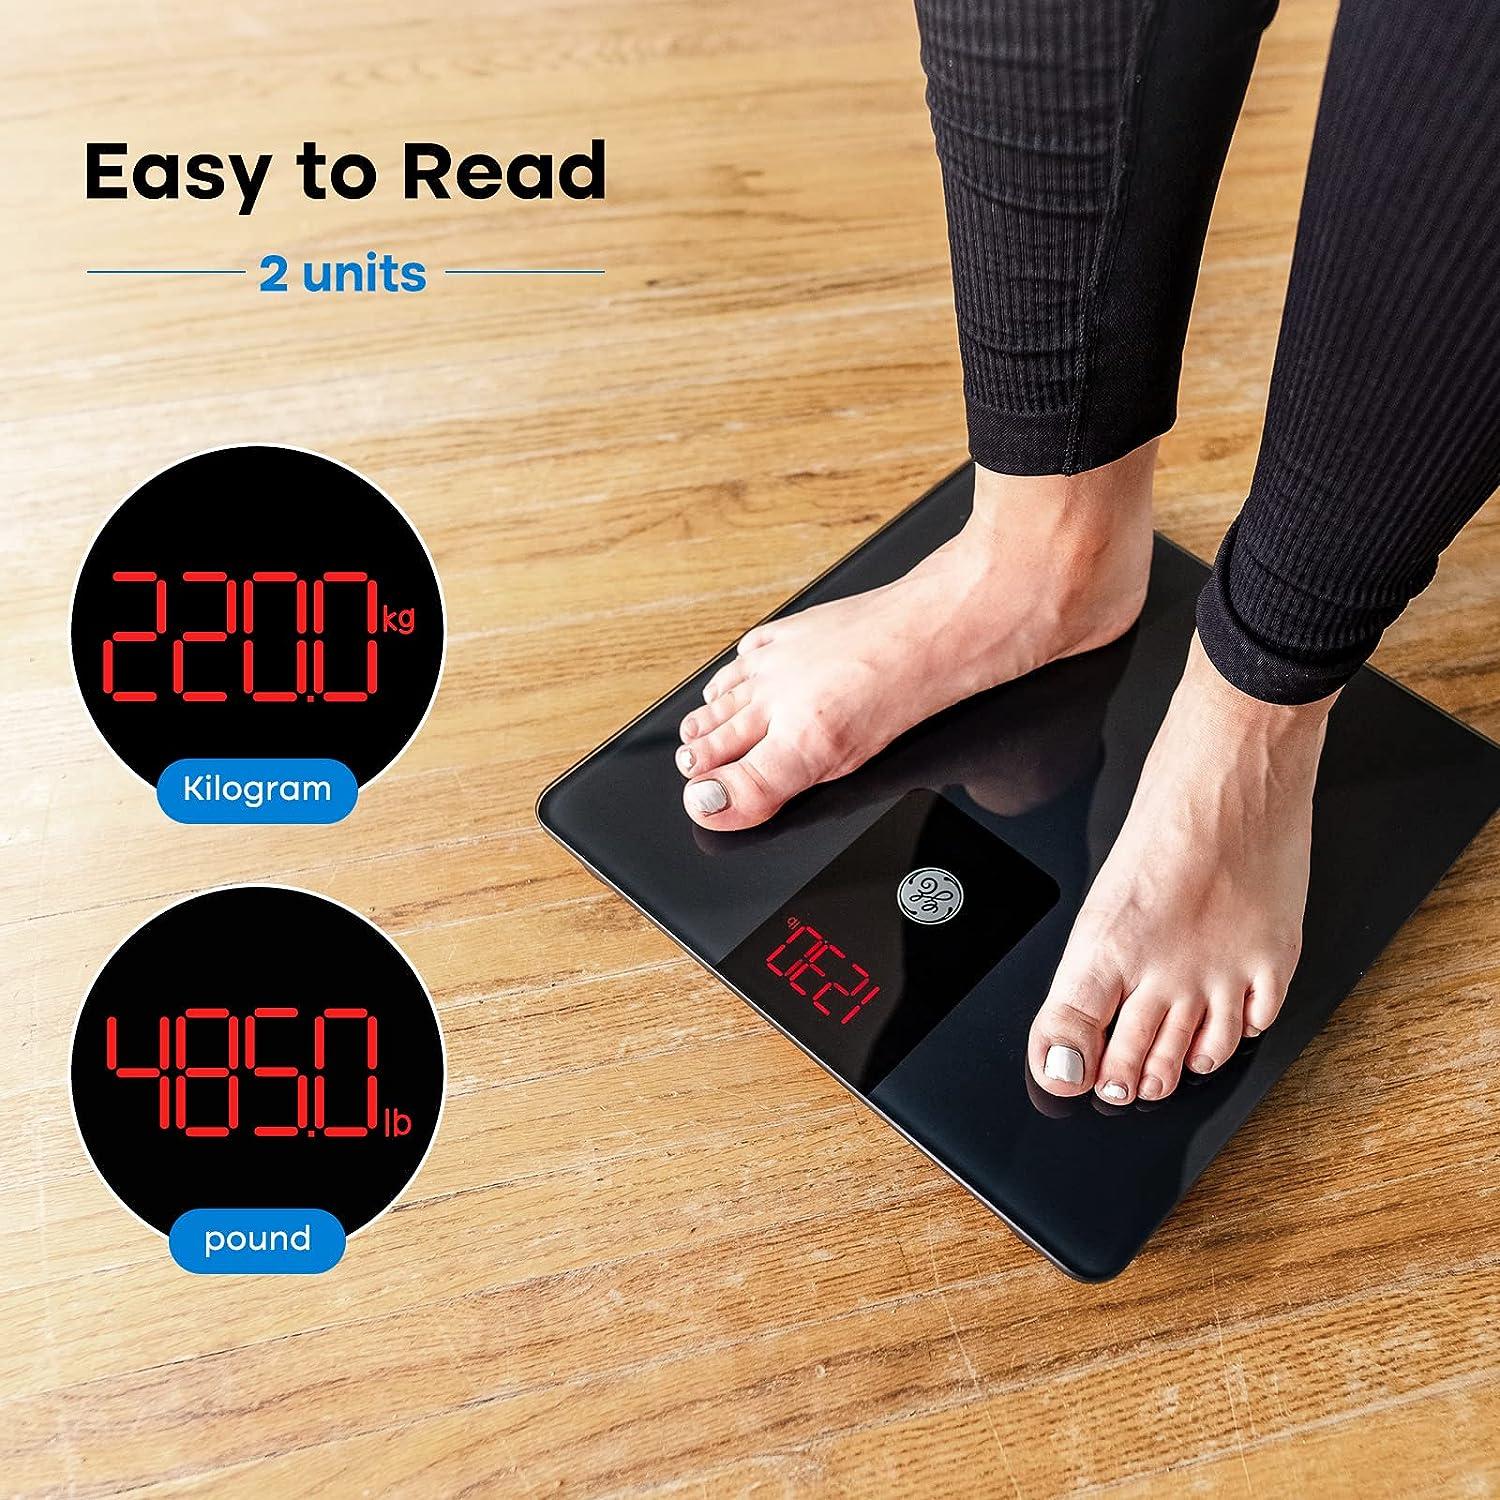 GE SC-500 Digital Body Weight Scale User Manual